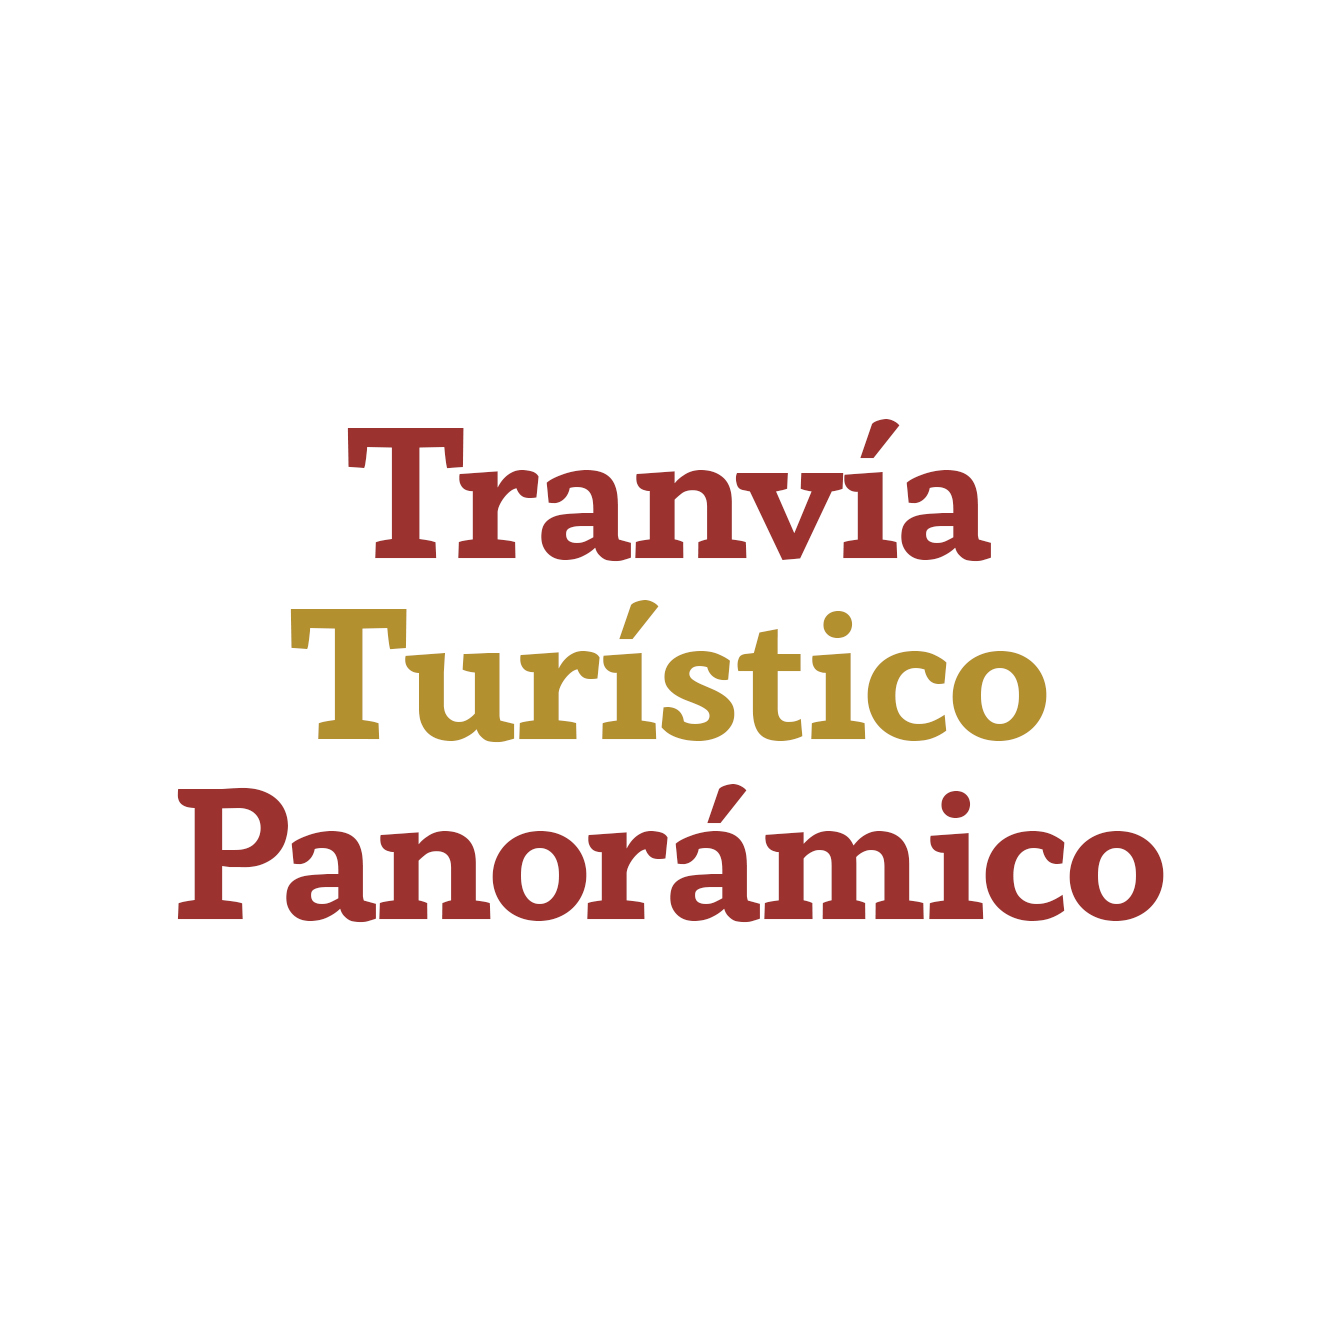 Tranvía Turístico Panorámico